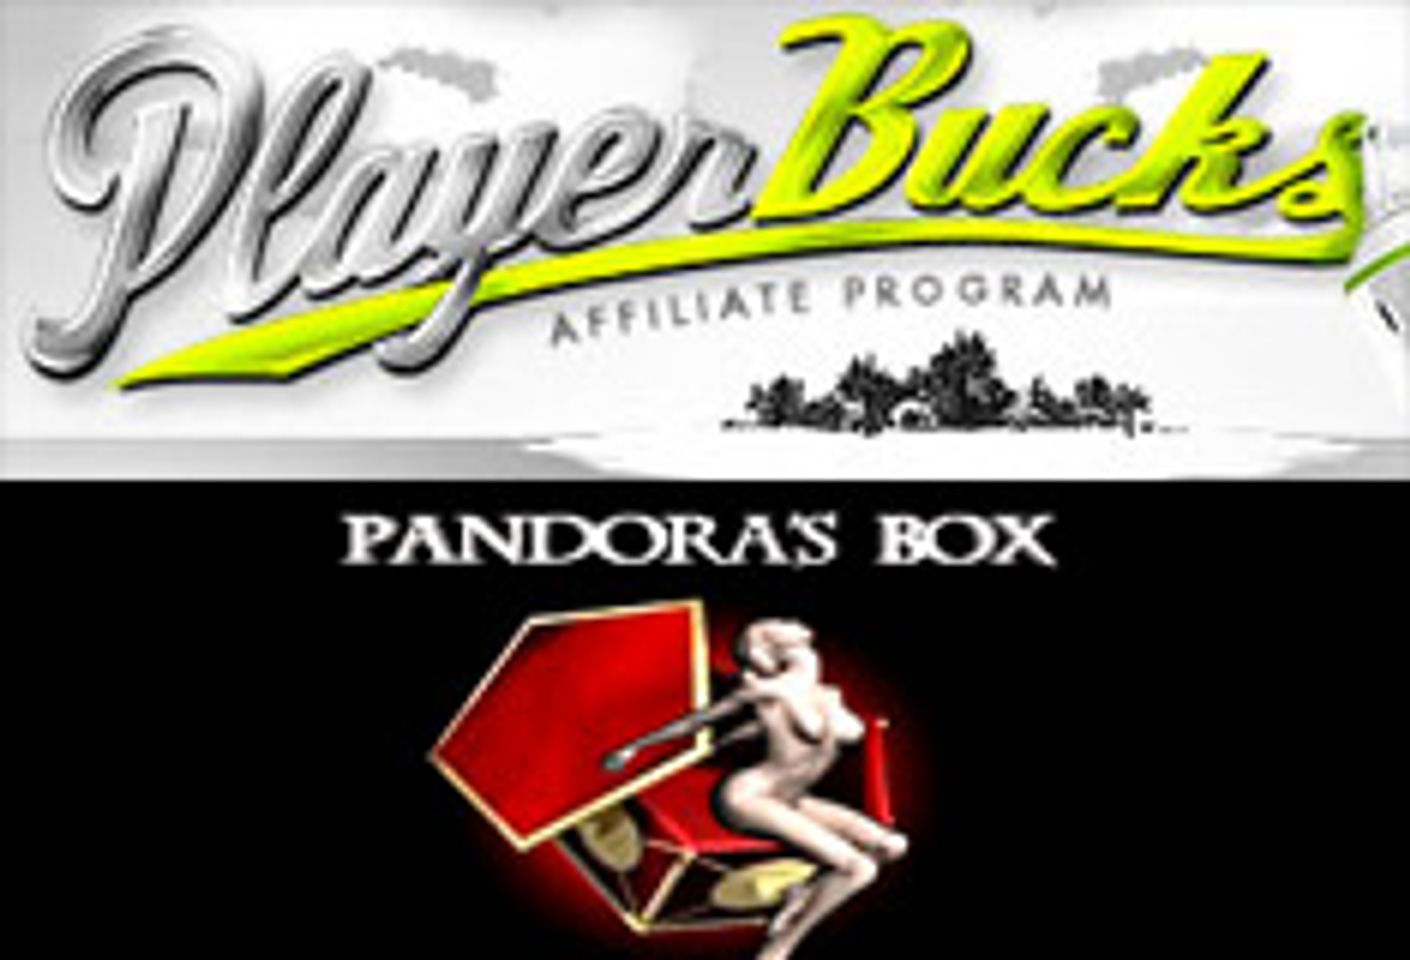 PlayerBucks.com, Pandora&#8217;s Box Pledge Aid to Help Victims of Hurricane Katrina